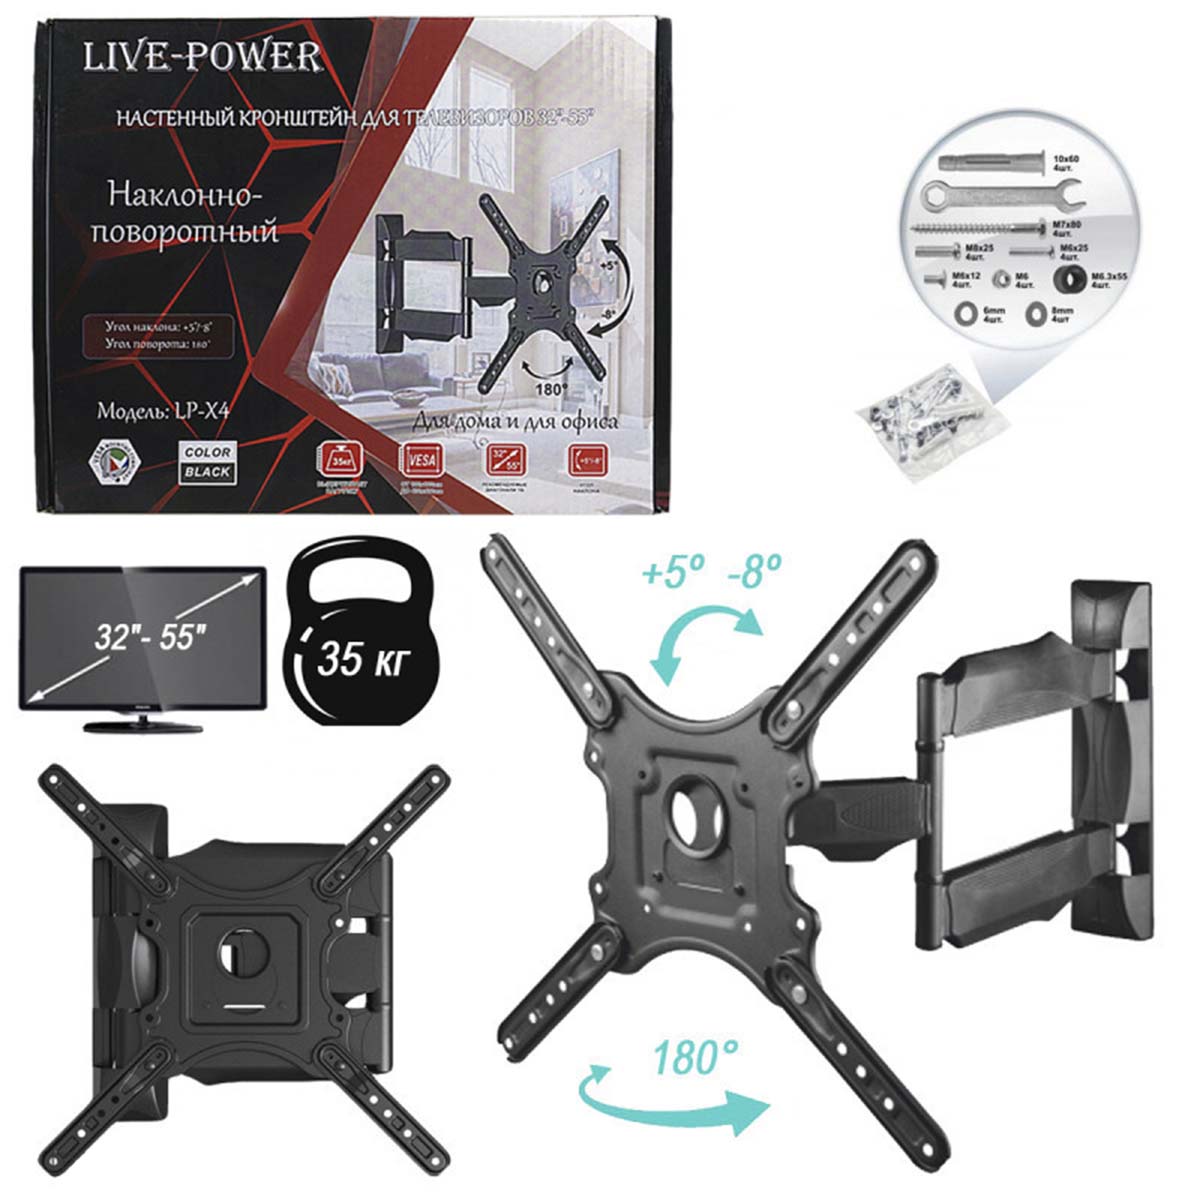 Кронштейн для ТВ Live-Power LP-X4, до 35 кг, цвет черный